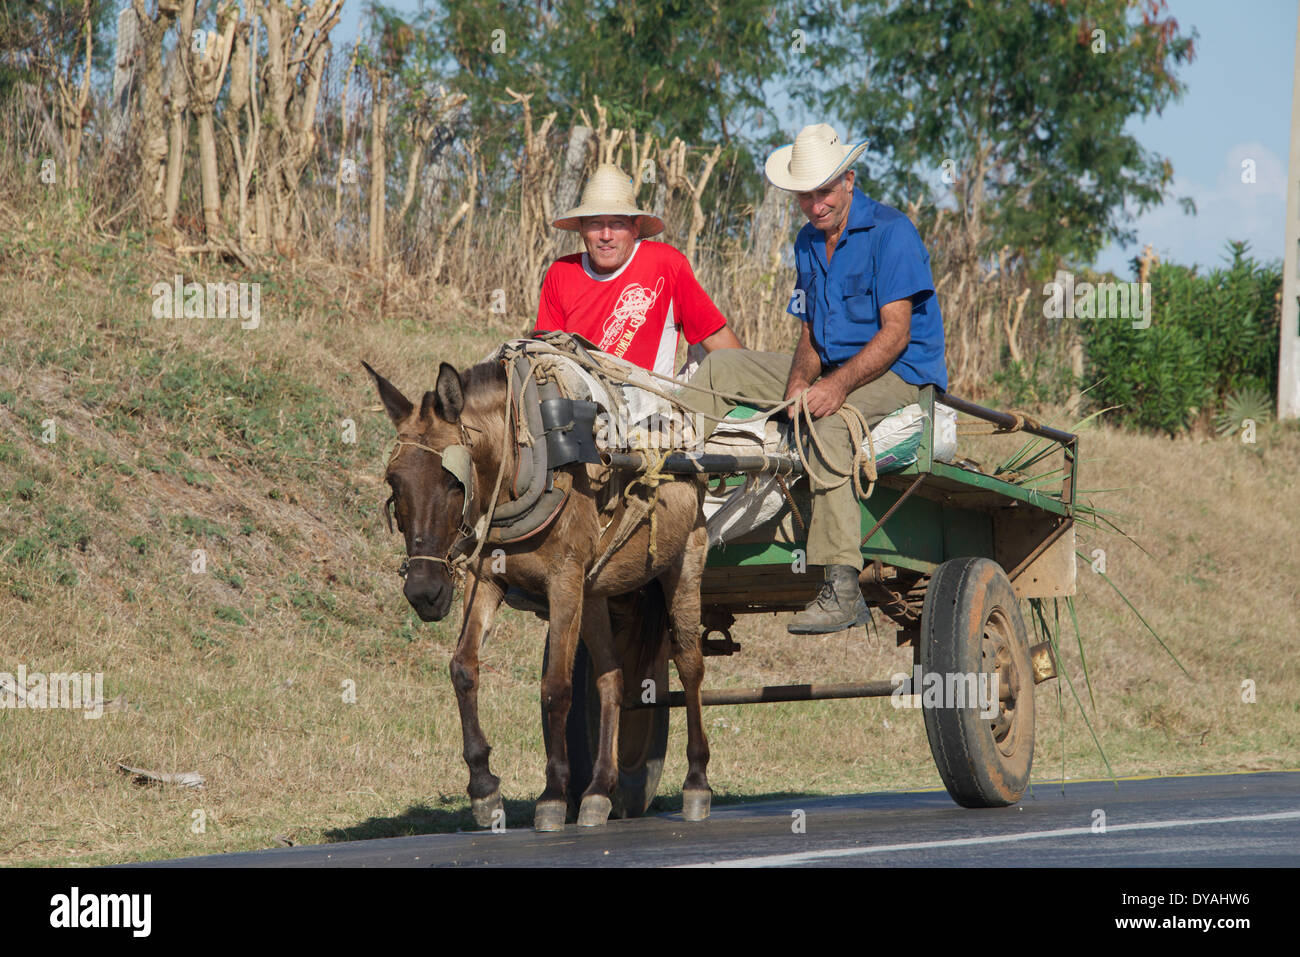 Two men on horse drawn cart Sancti Spiritus Province Cuba Stock Photo